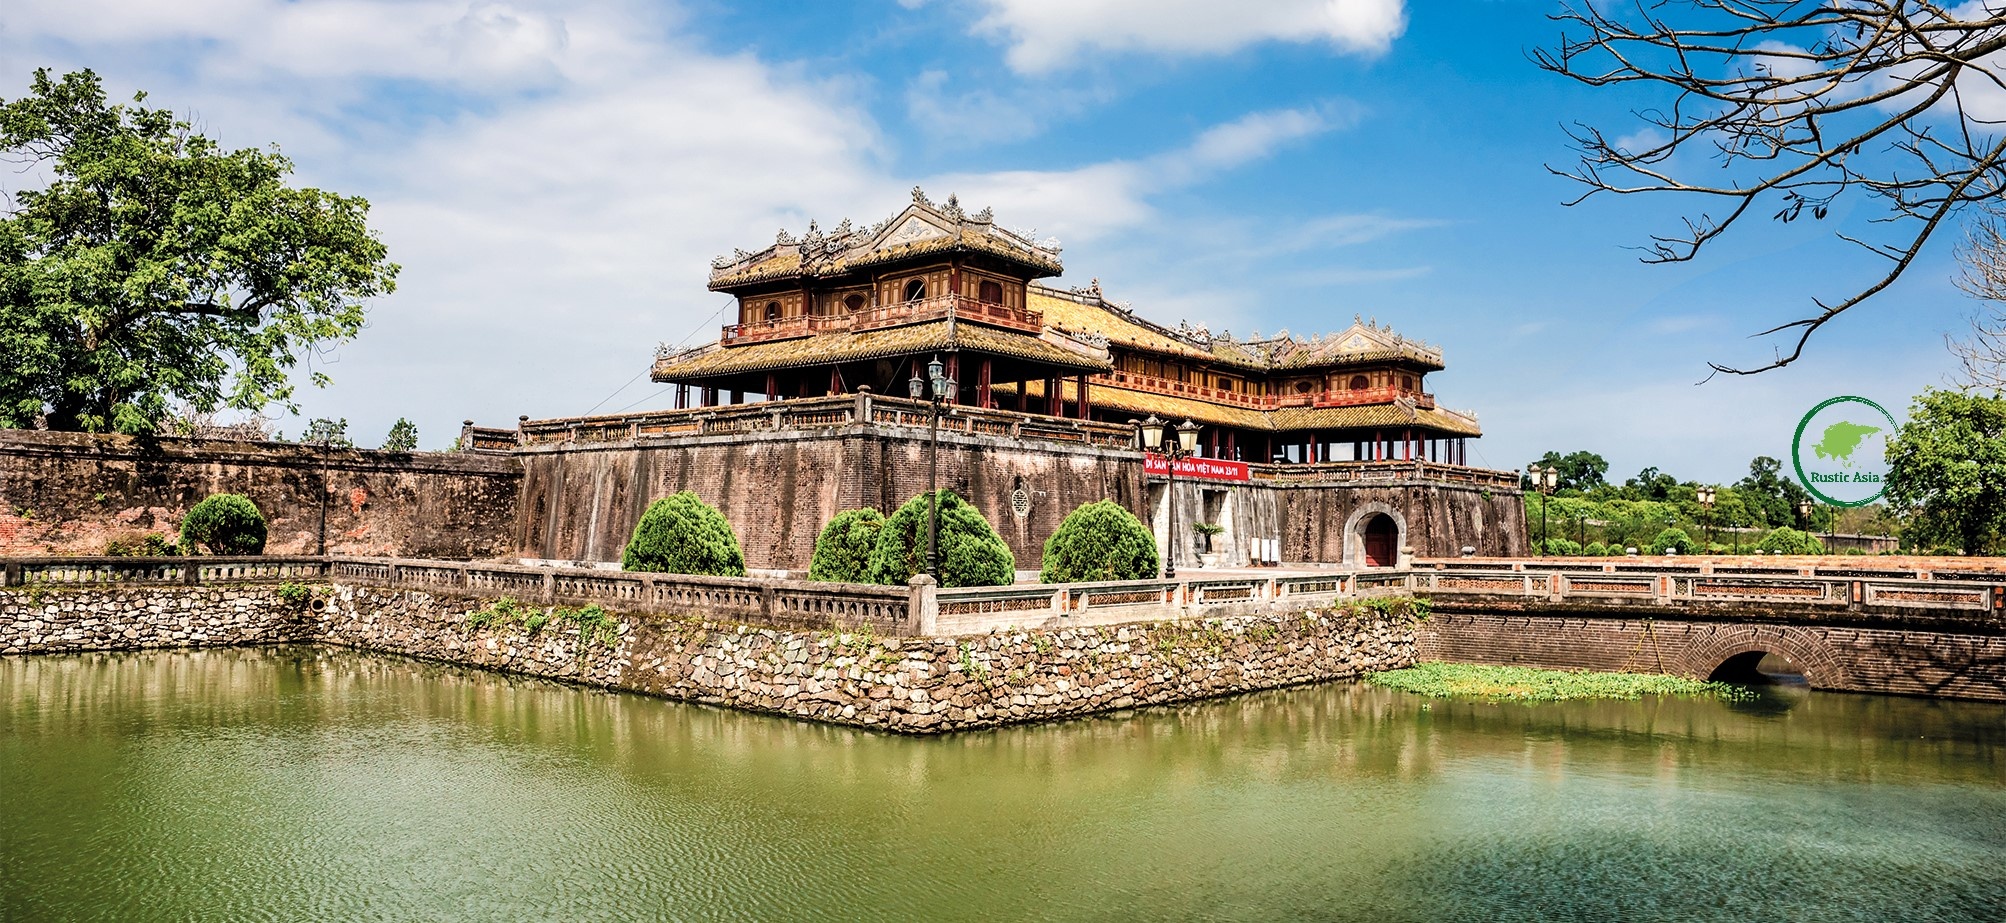 tourhub | Rustic Asia Travel | Best of Vietnam 7 Days by Rustic Asia Travel | 7DVNtour